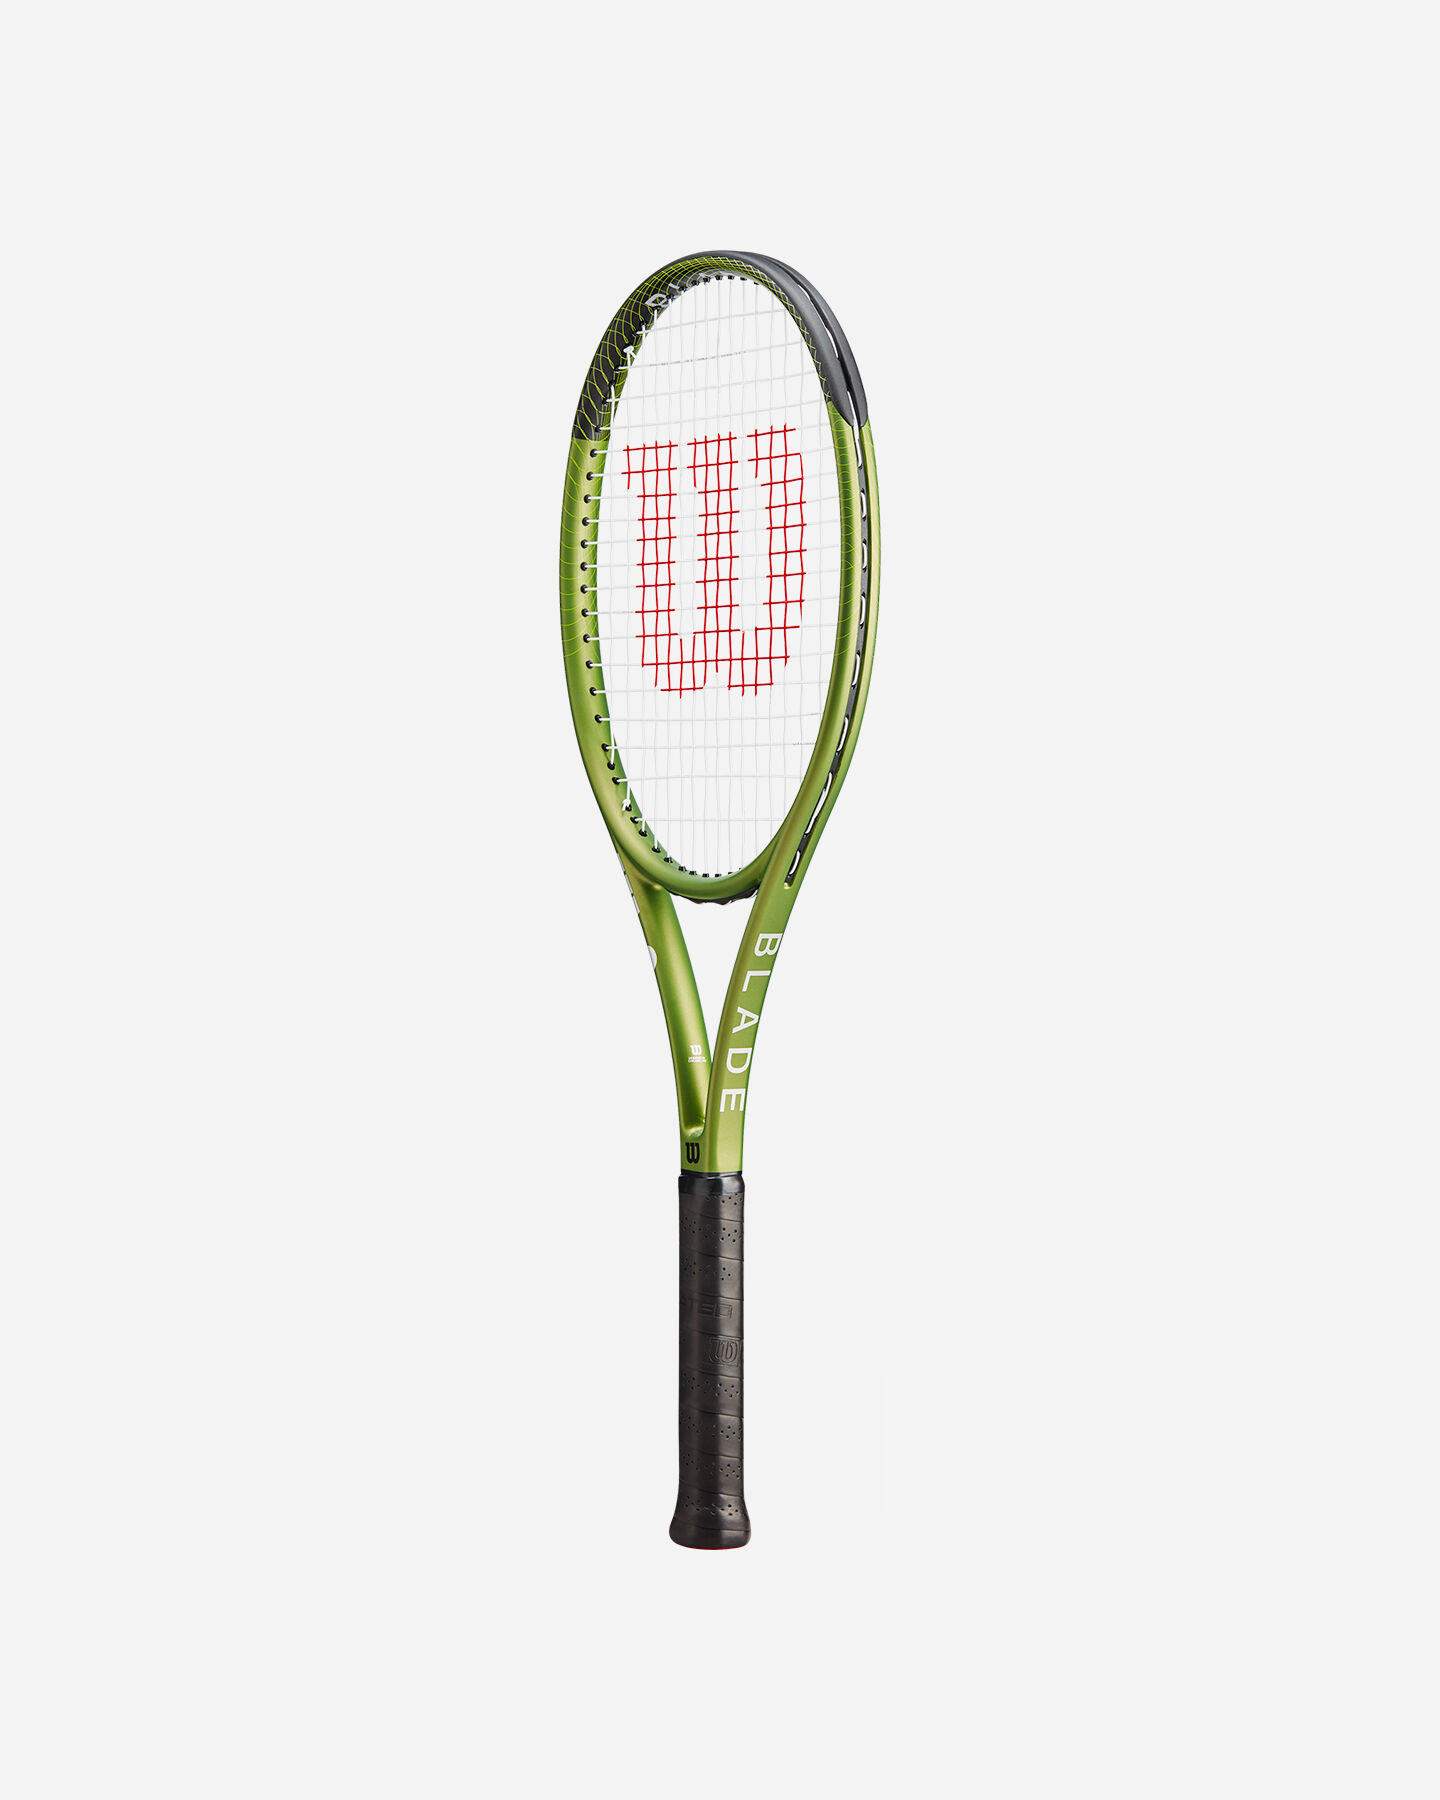  Racchetta tennis WILSON BLADE FEEL 100 300G  S5617179|UNI|2 scatto 2